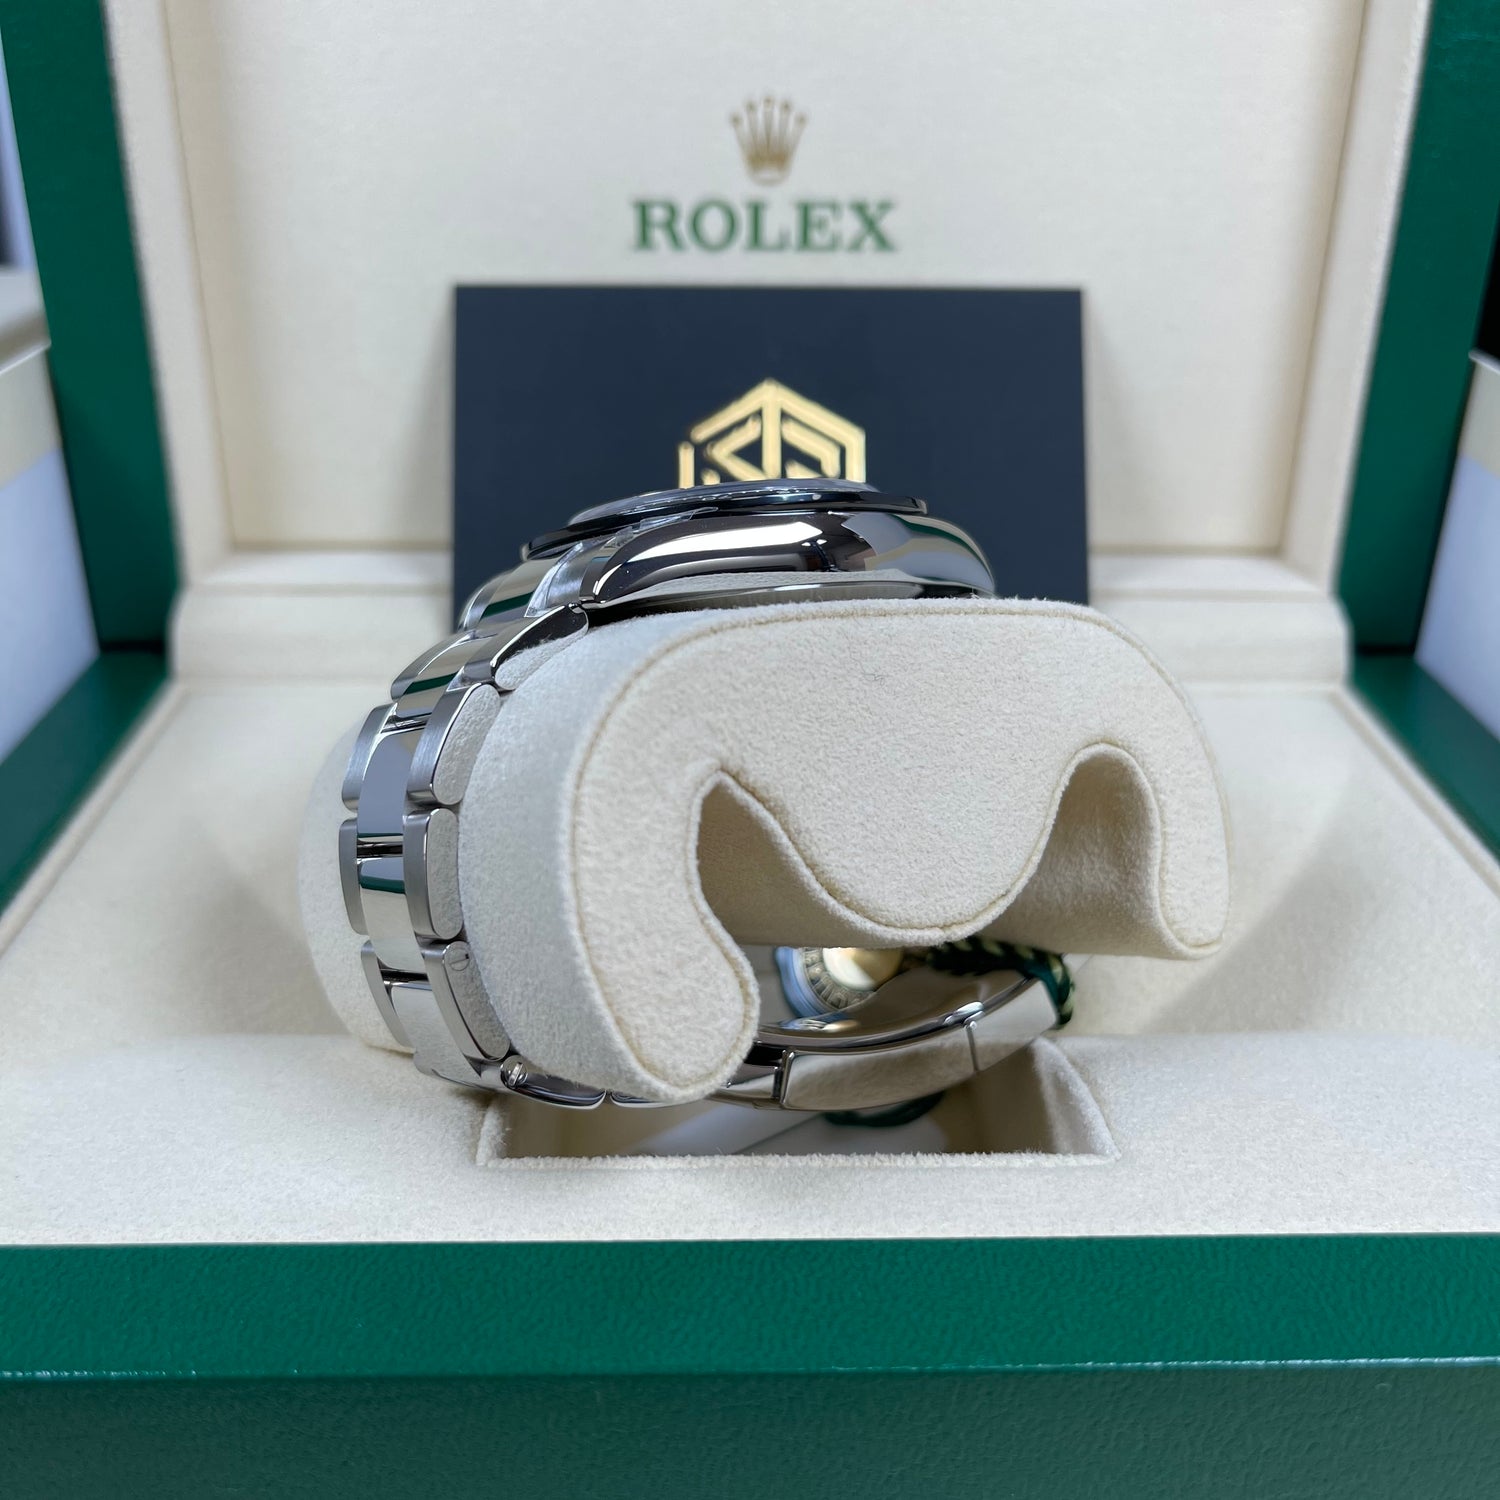 Rolex Cosmograph Daytona Ceramic Black Dial 116500LN 2021 Brand New Watch